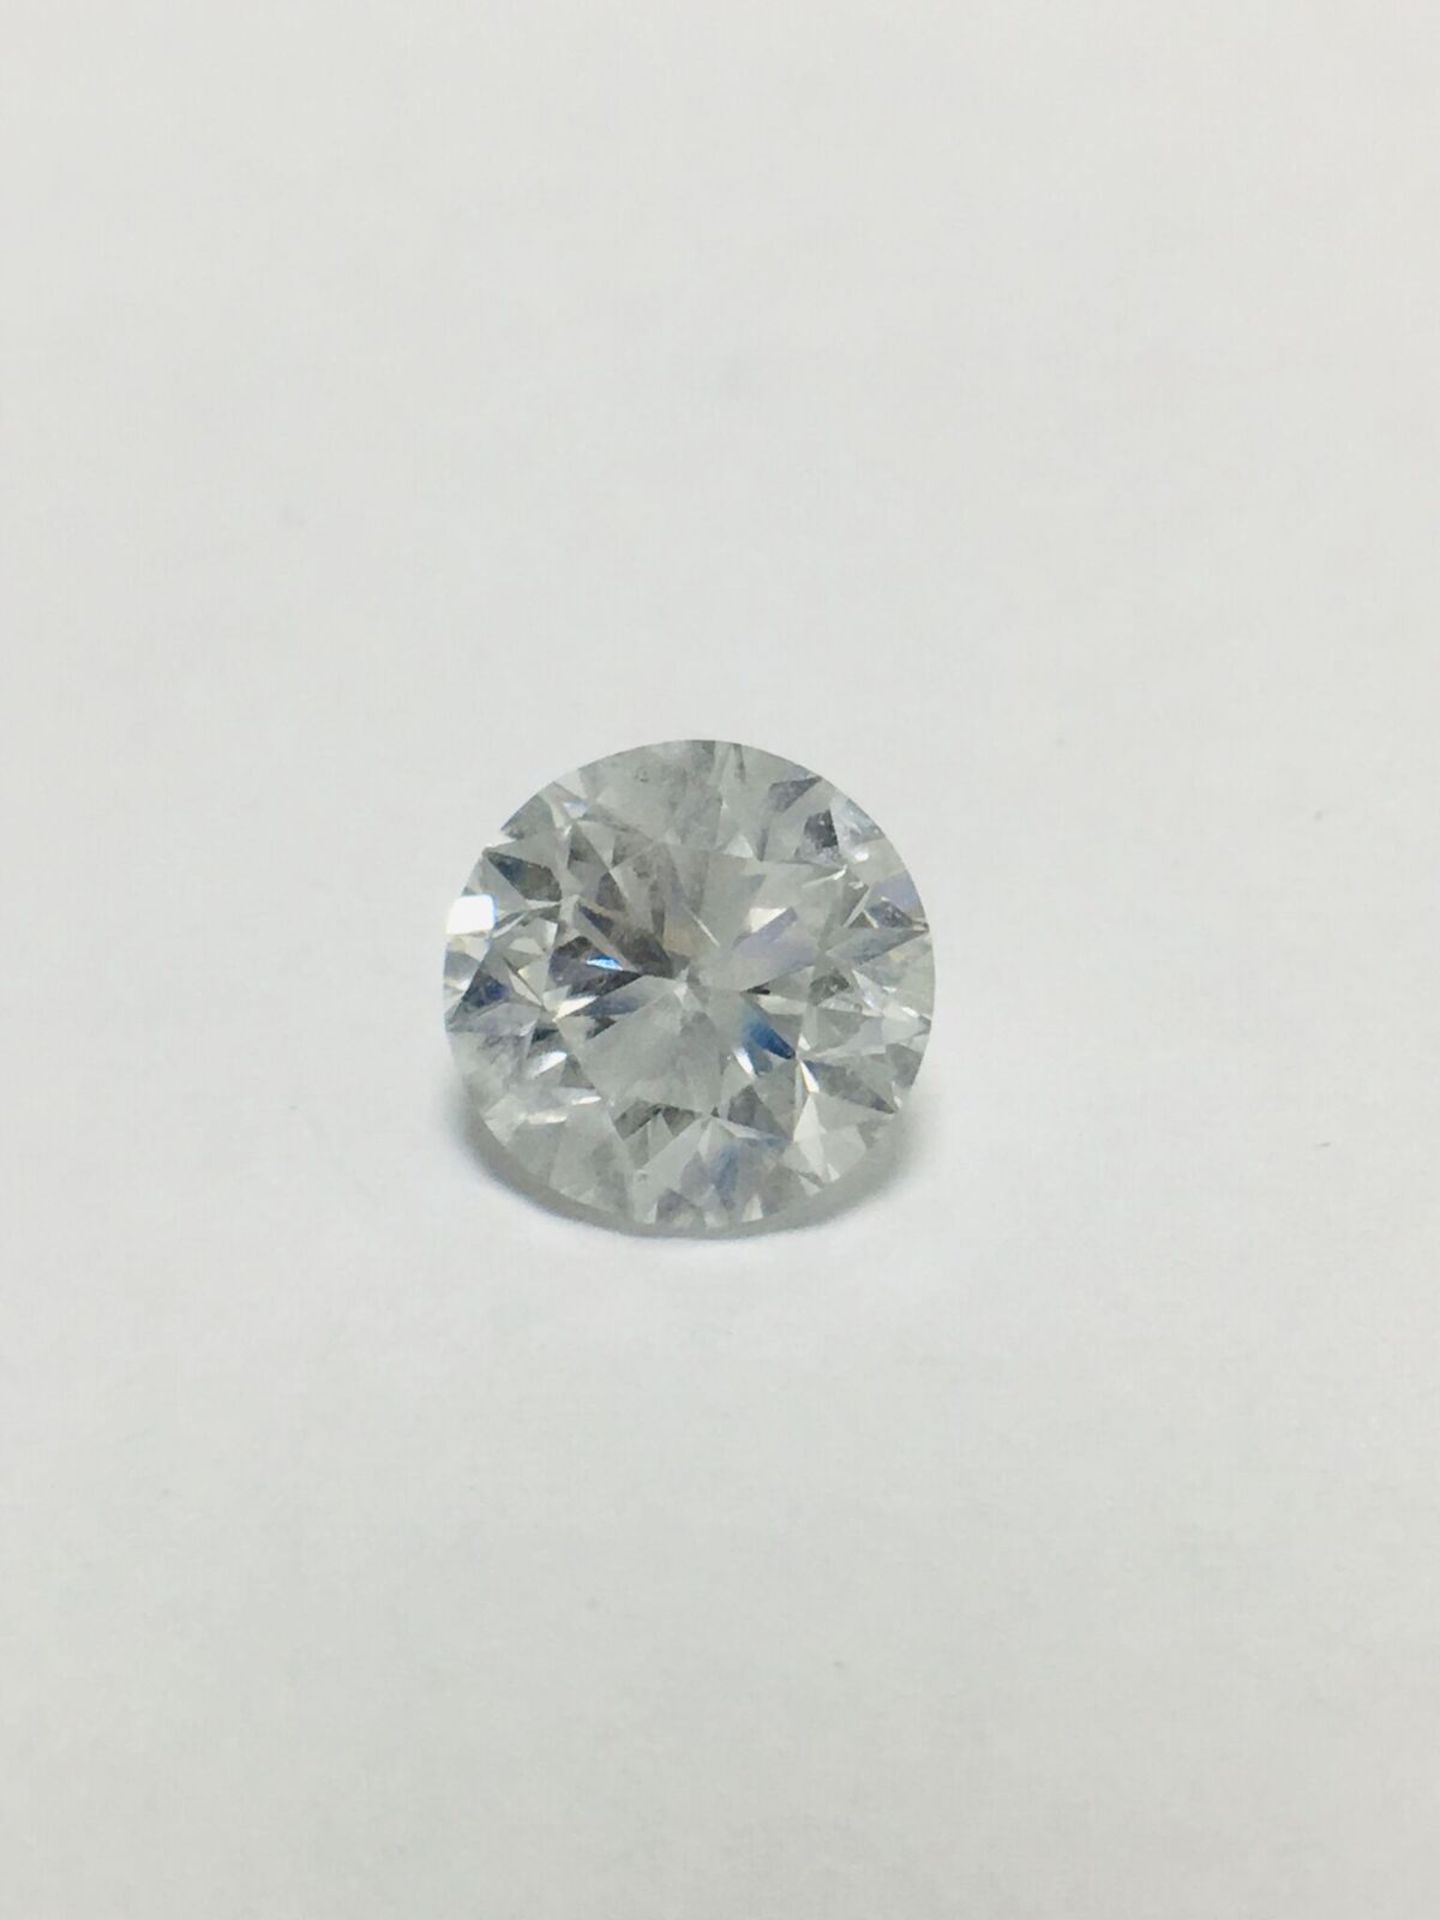 1.60Ct Natural Brilliant Cut Diamond - Image 3 of 4